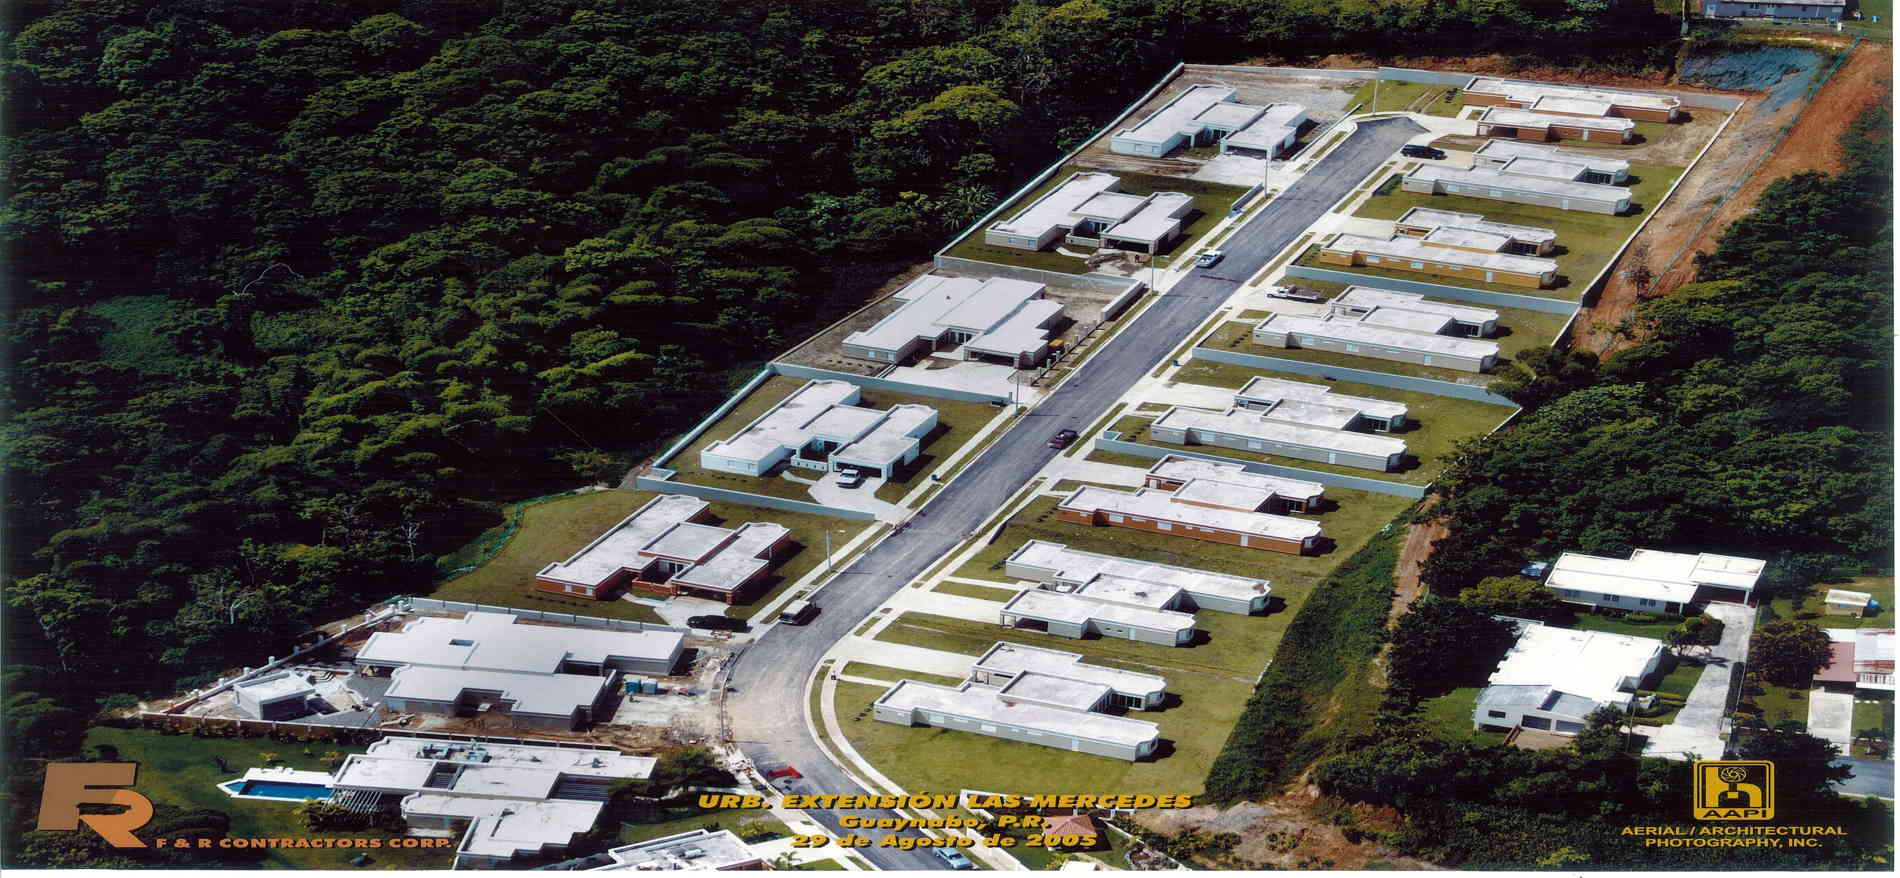 Villa Mercedes Development Phase II Guaynabo Puerto Rico F&R Construction Company